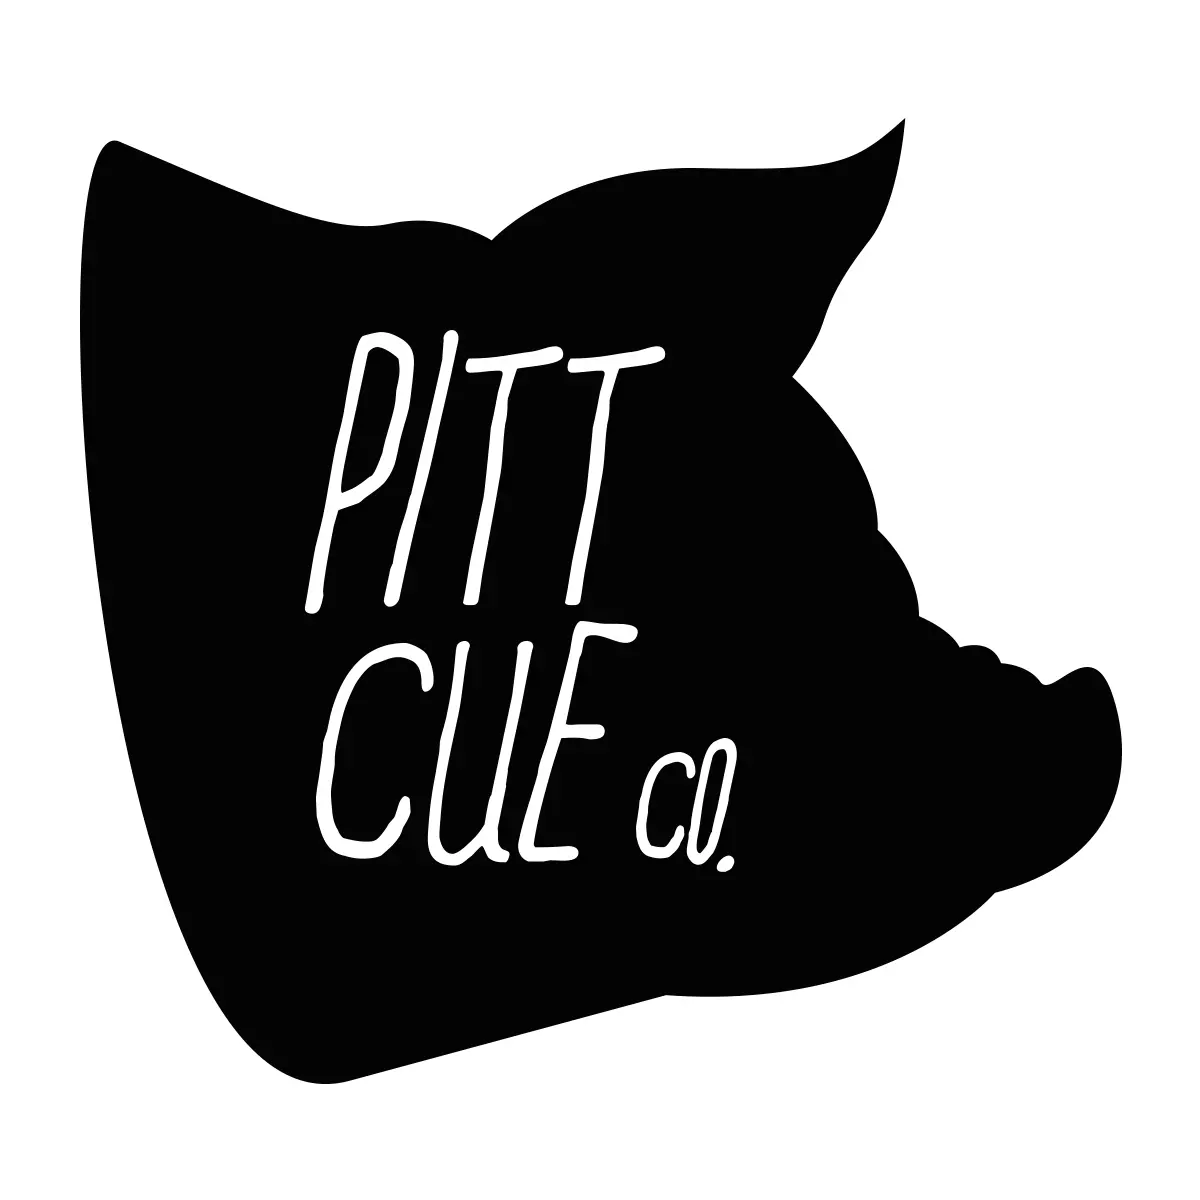 Pitt Cue Co. Secondary Logo Black On White